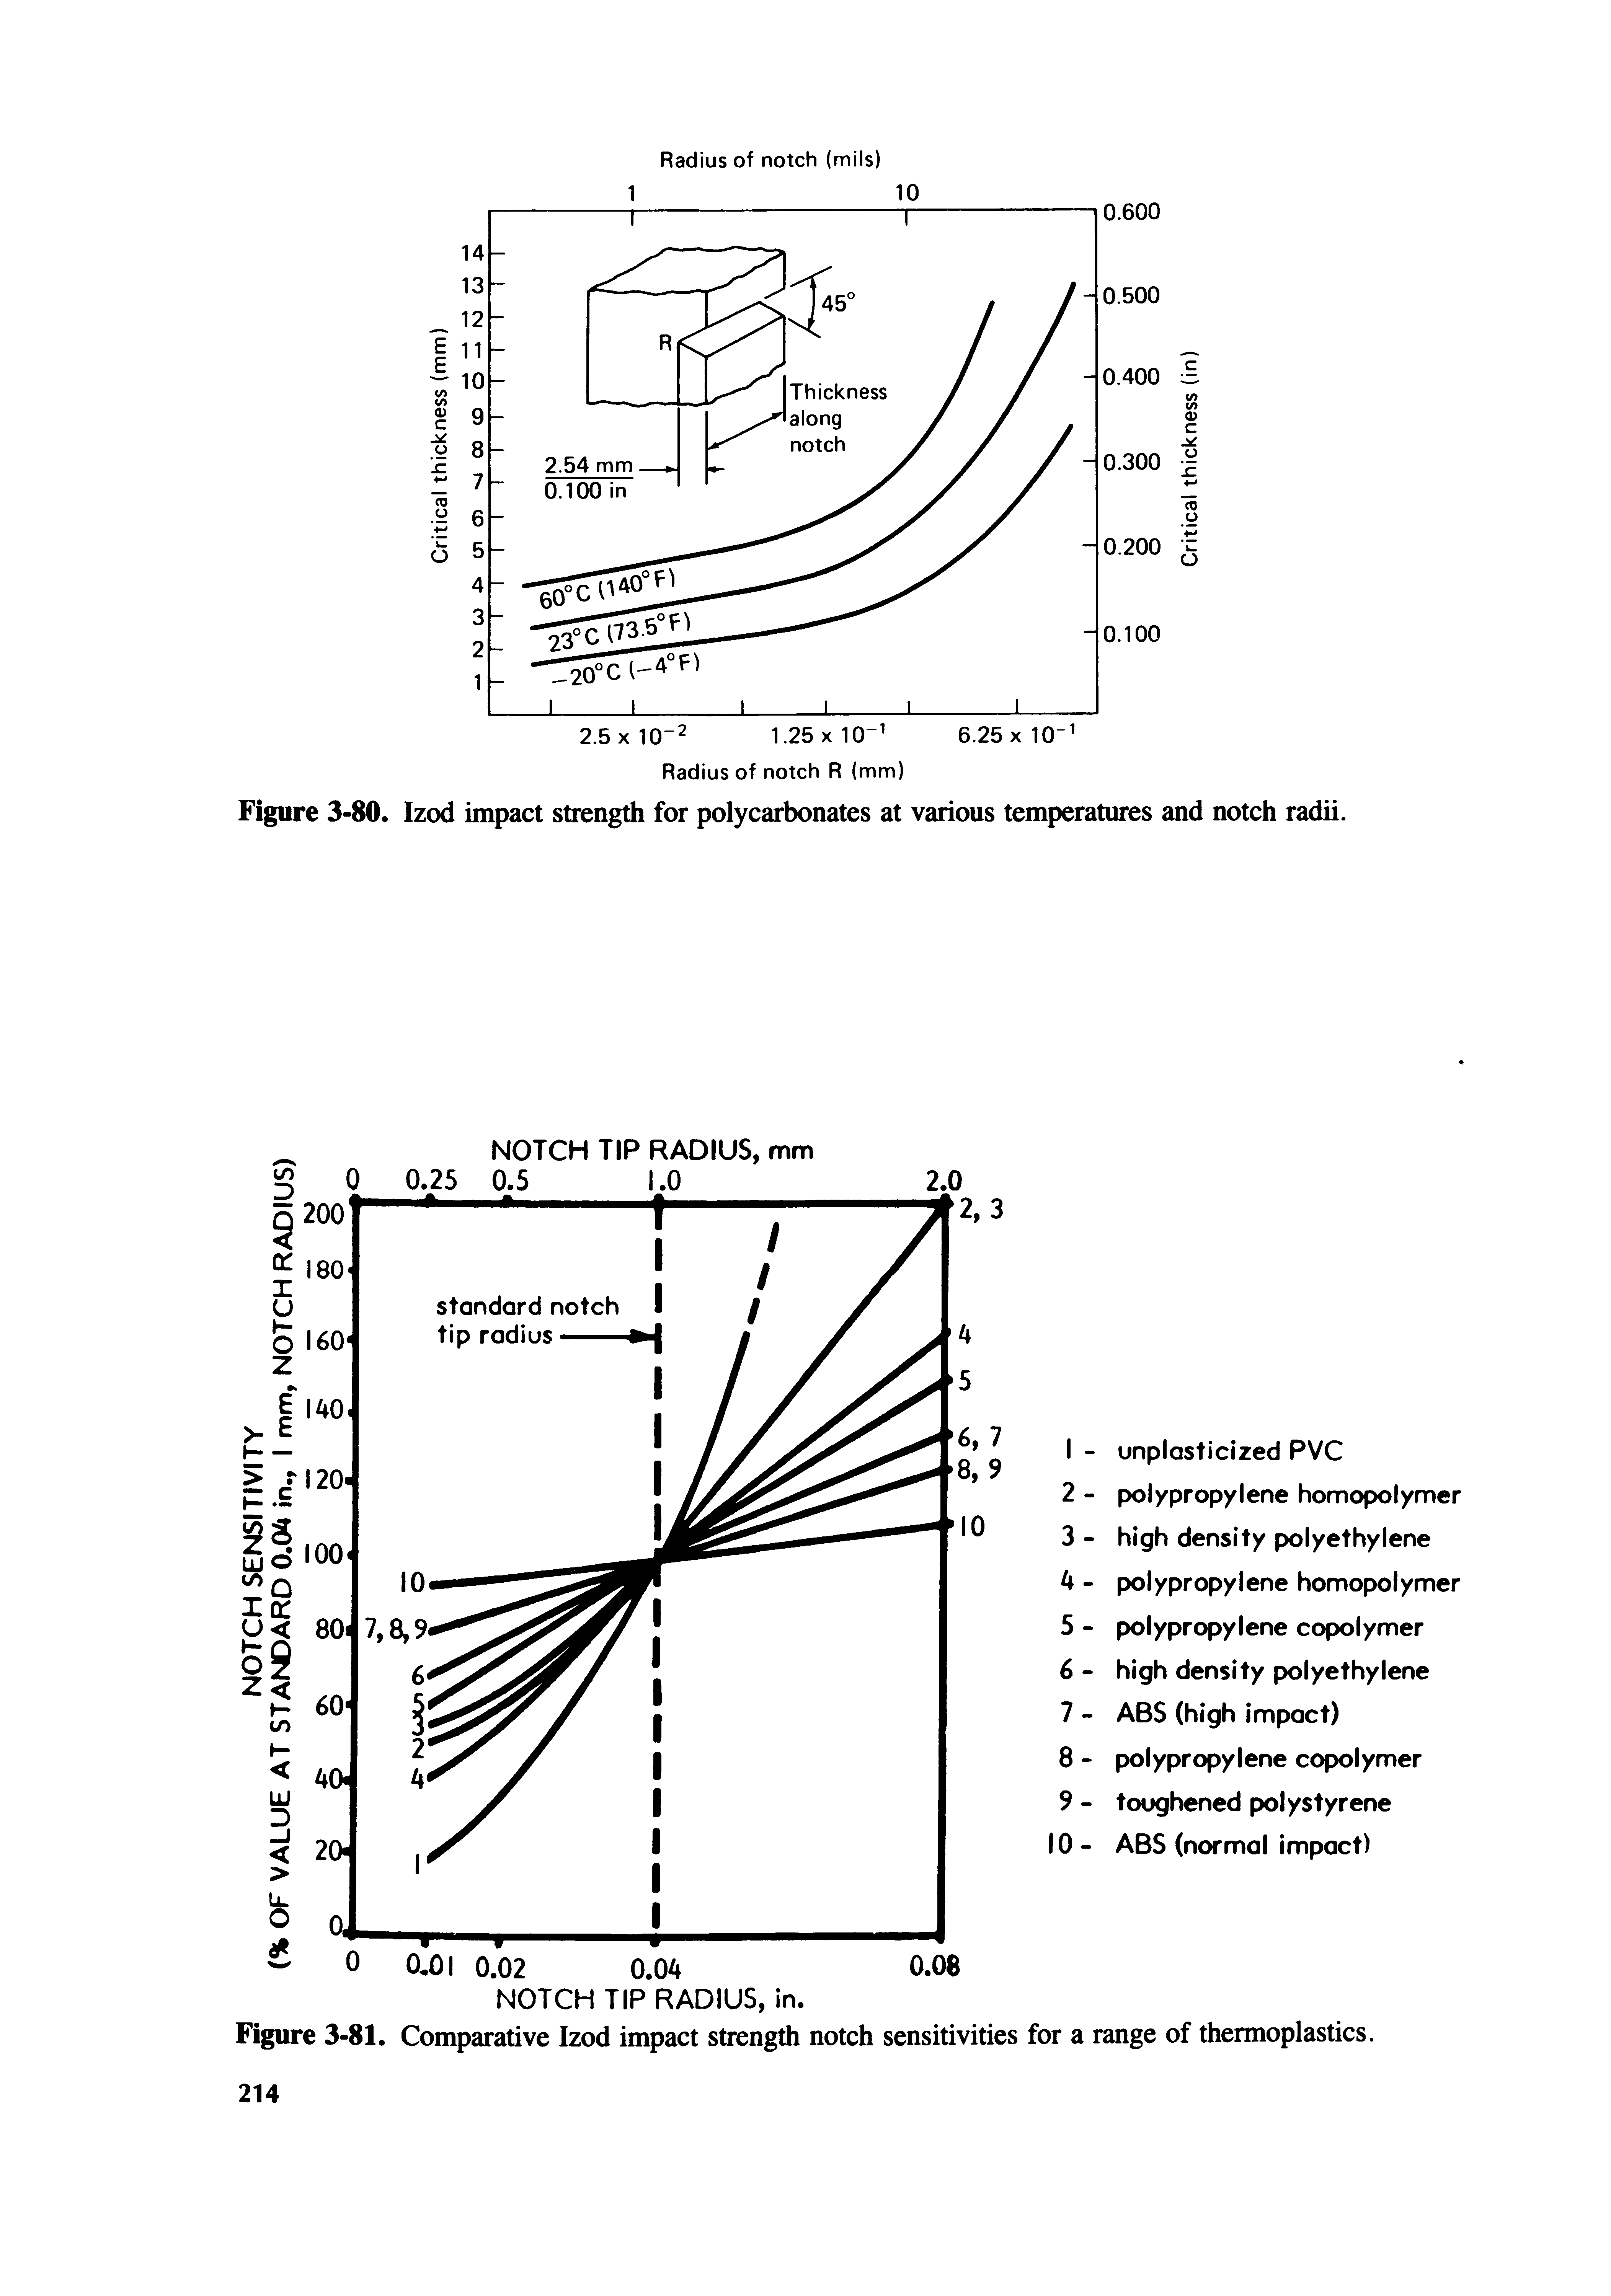 Figure 3-81. Comparative Izod impact strength notch sensitivities for a range of thermoplastics. 214...